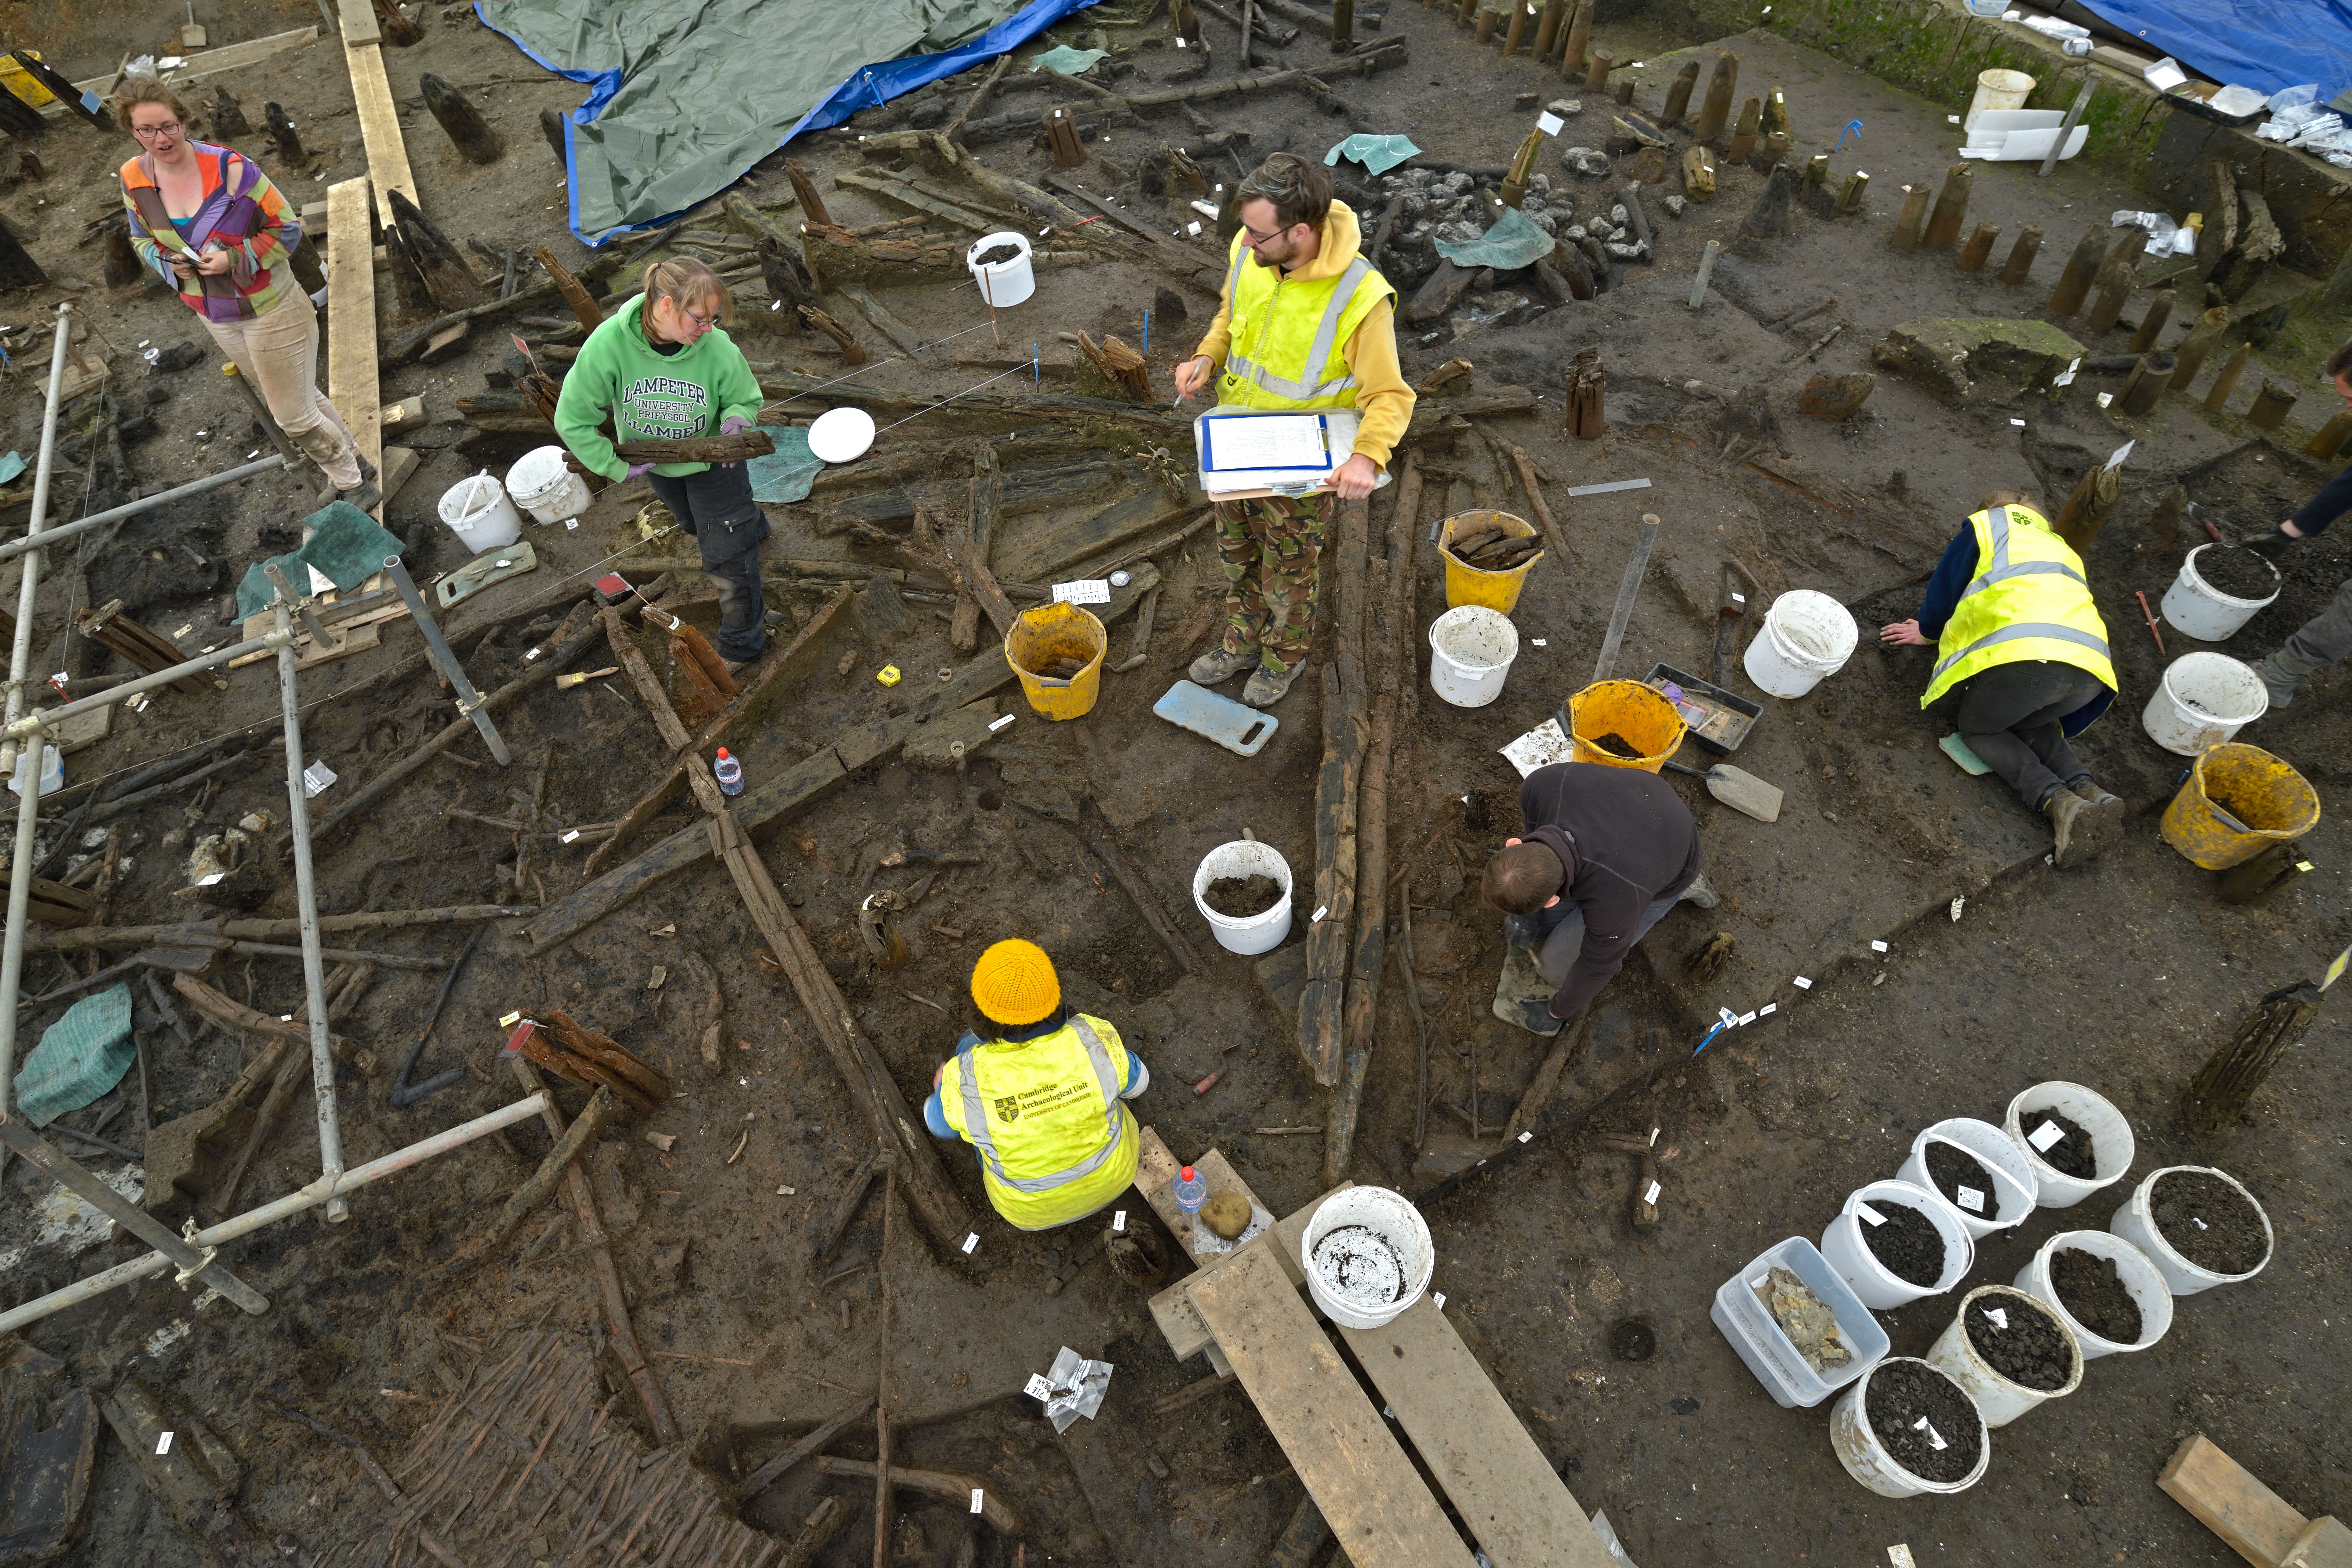 The Must Farm excavation site in Cambridgeshire (Cambridge Archaeological Unit/PA)